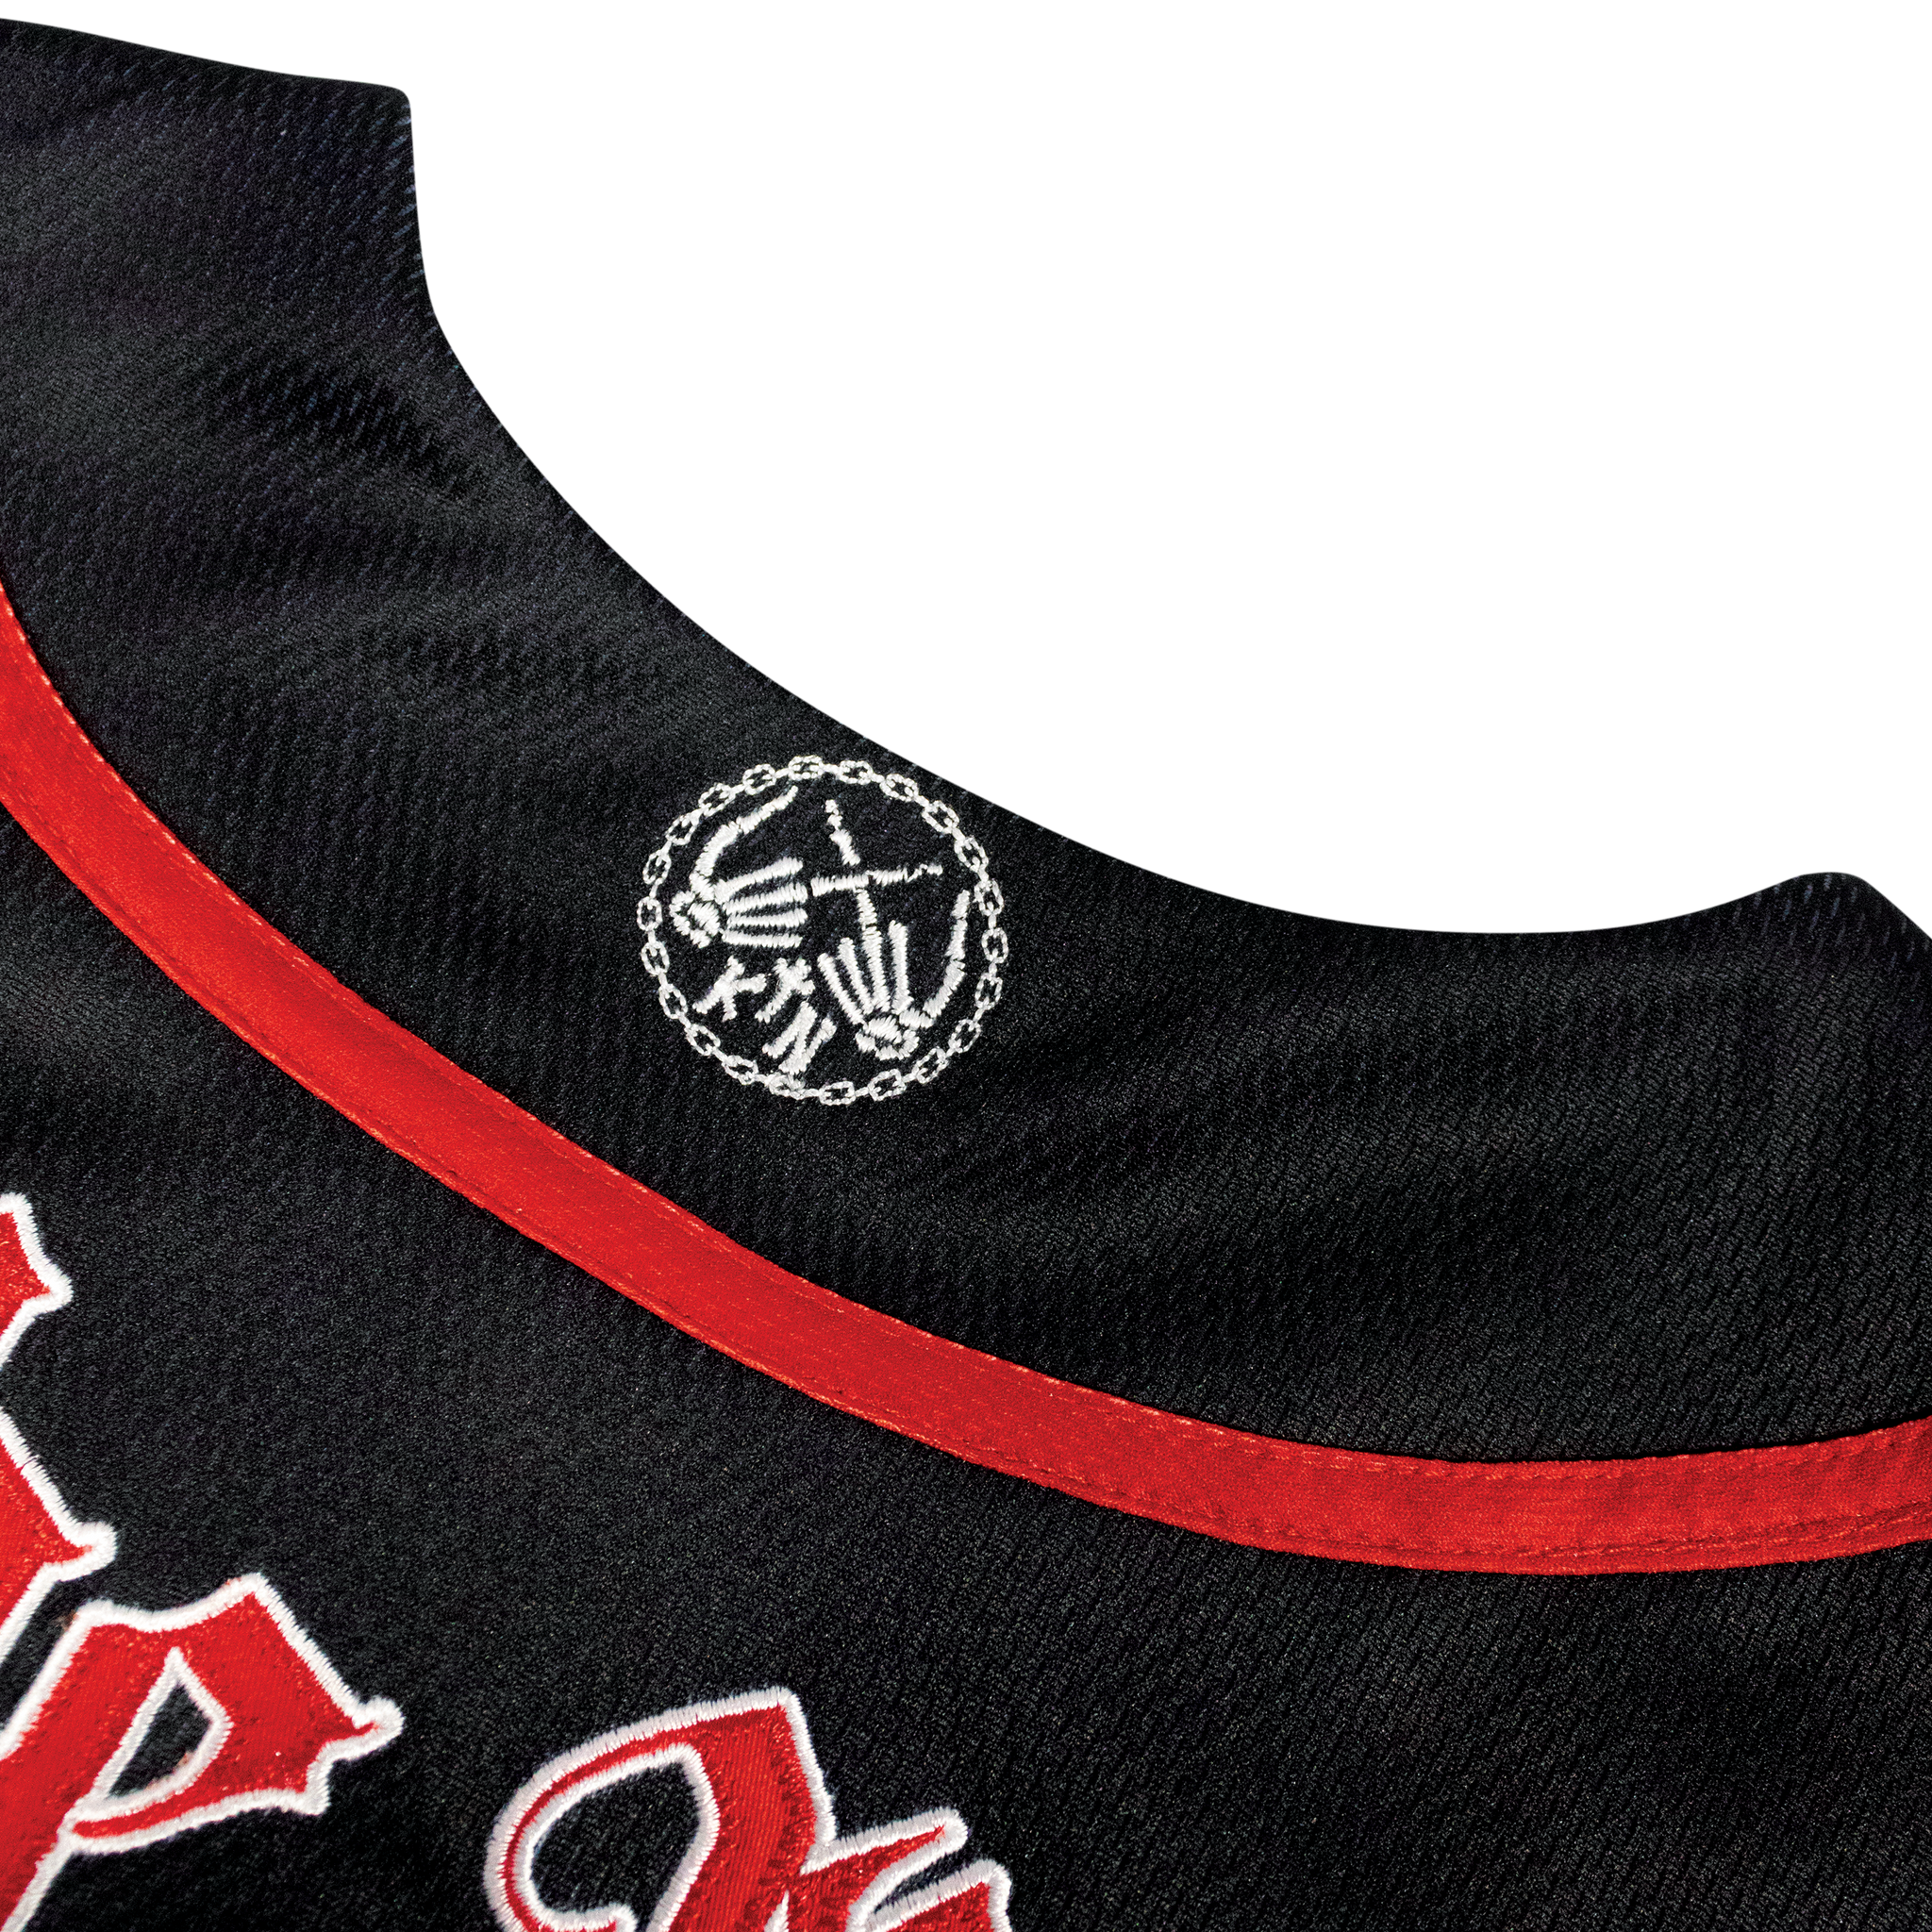 KTN Baseball Jersey back collar detail